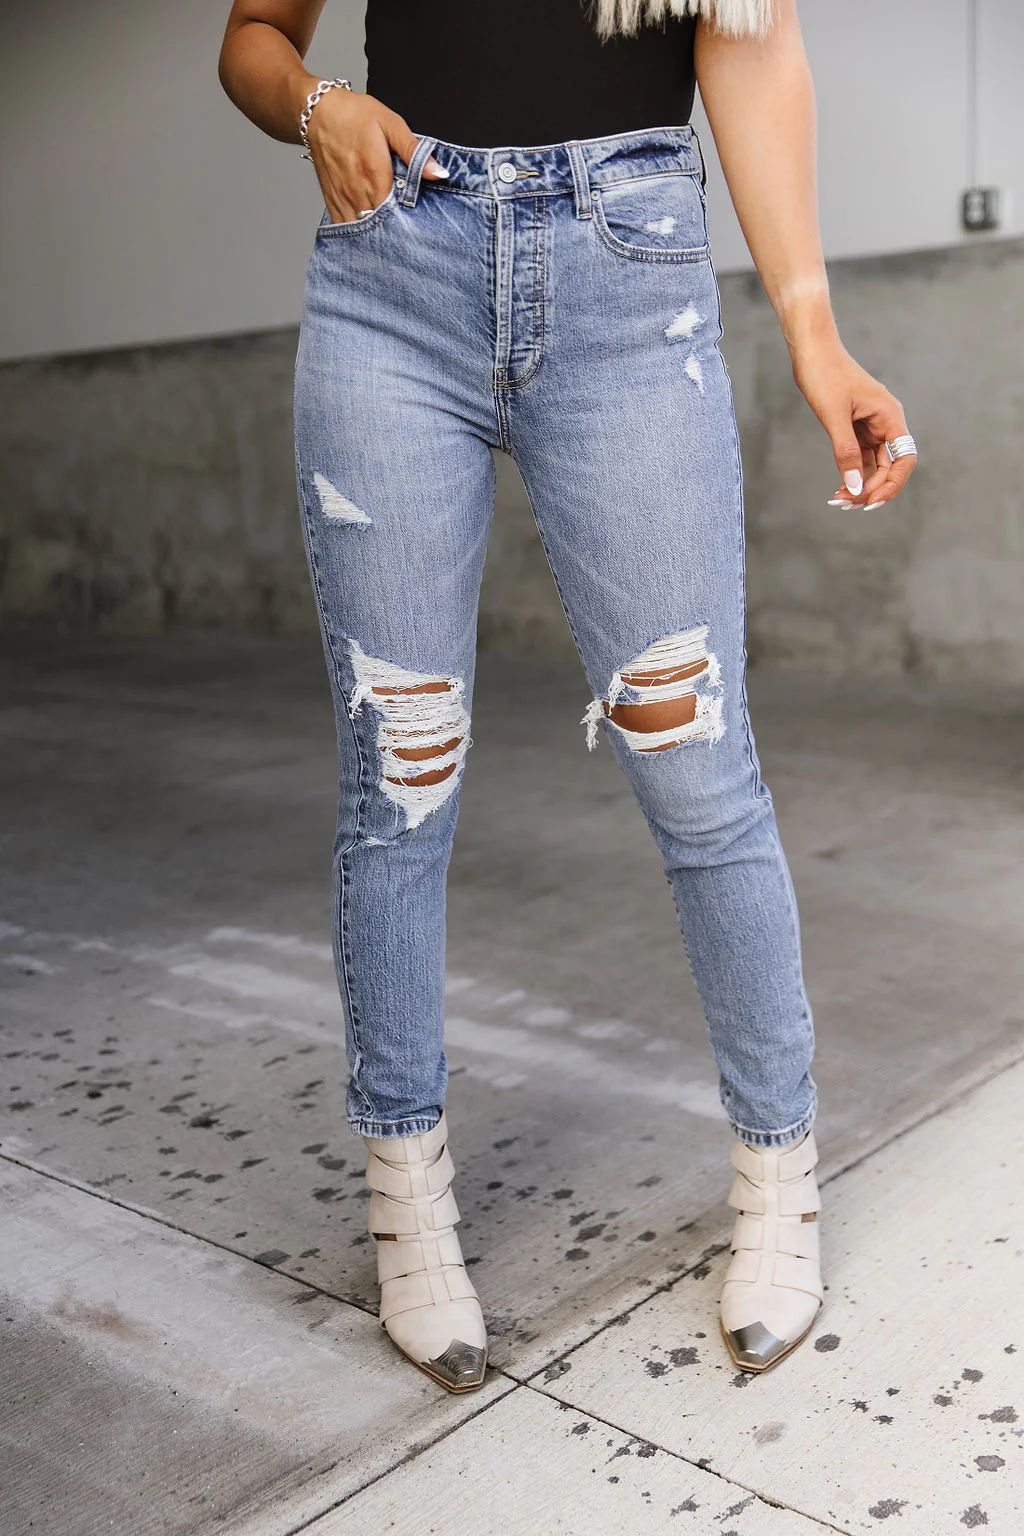 Hot Rod Distressed Jeans | Mindy Mae's Market